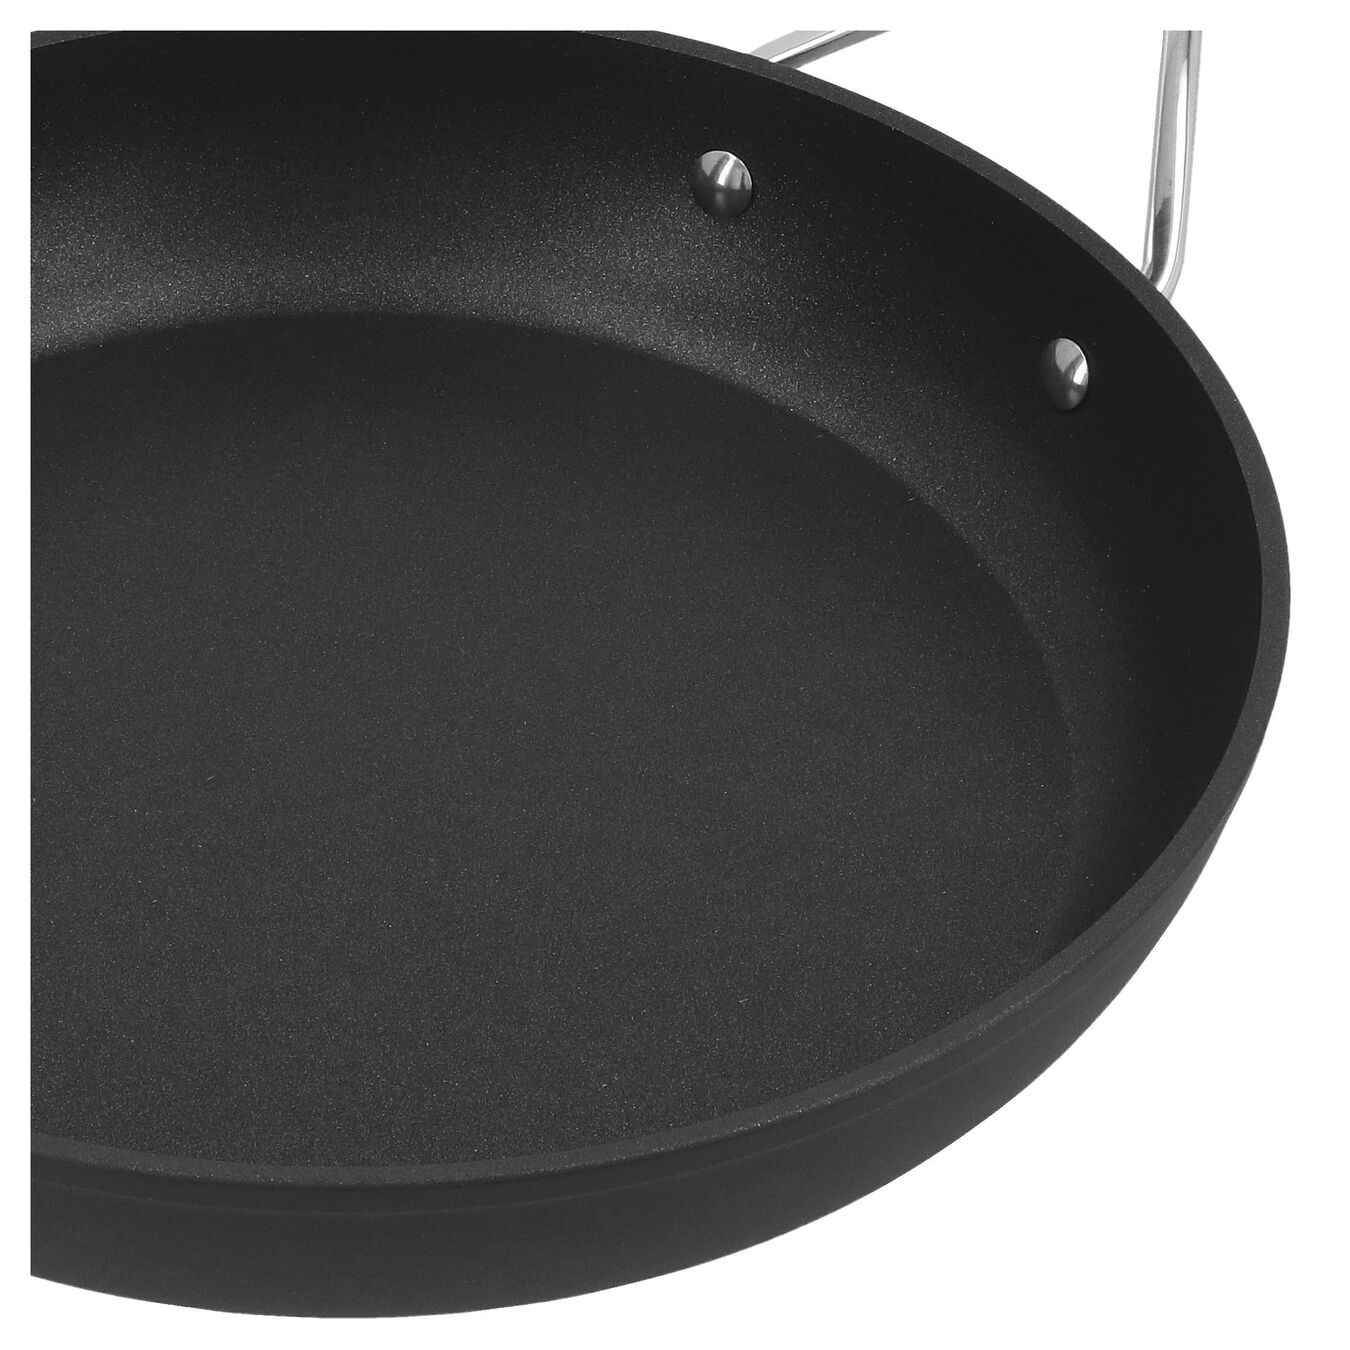 28 cm Aluminum Frying pan silver-black,,large 3